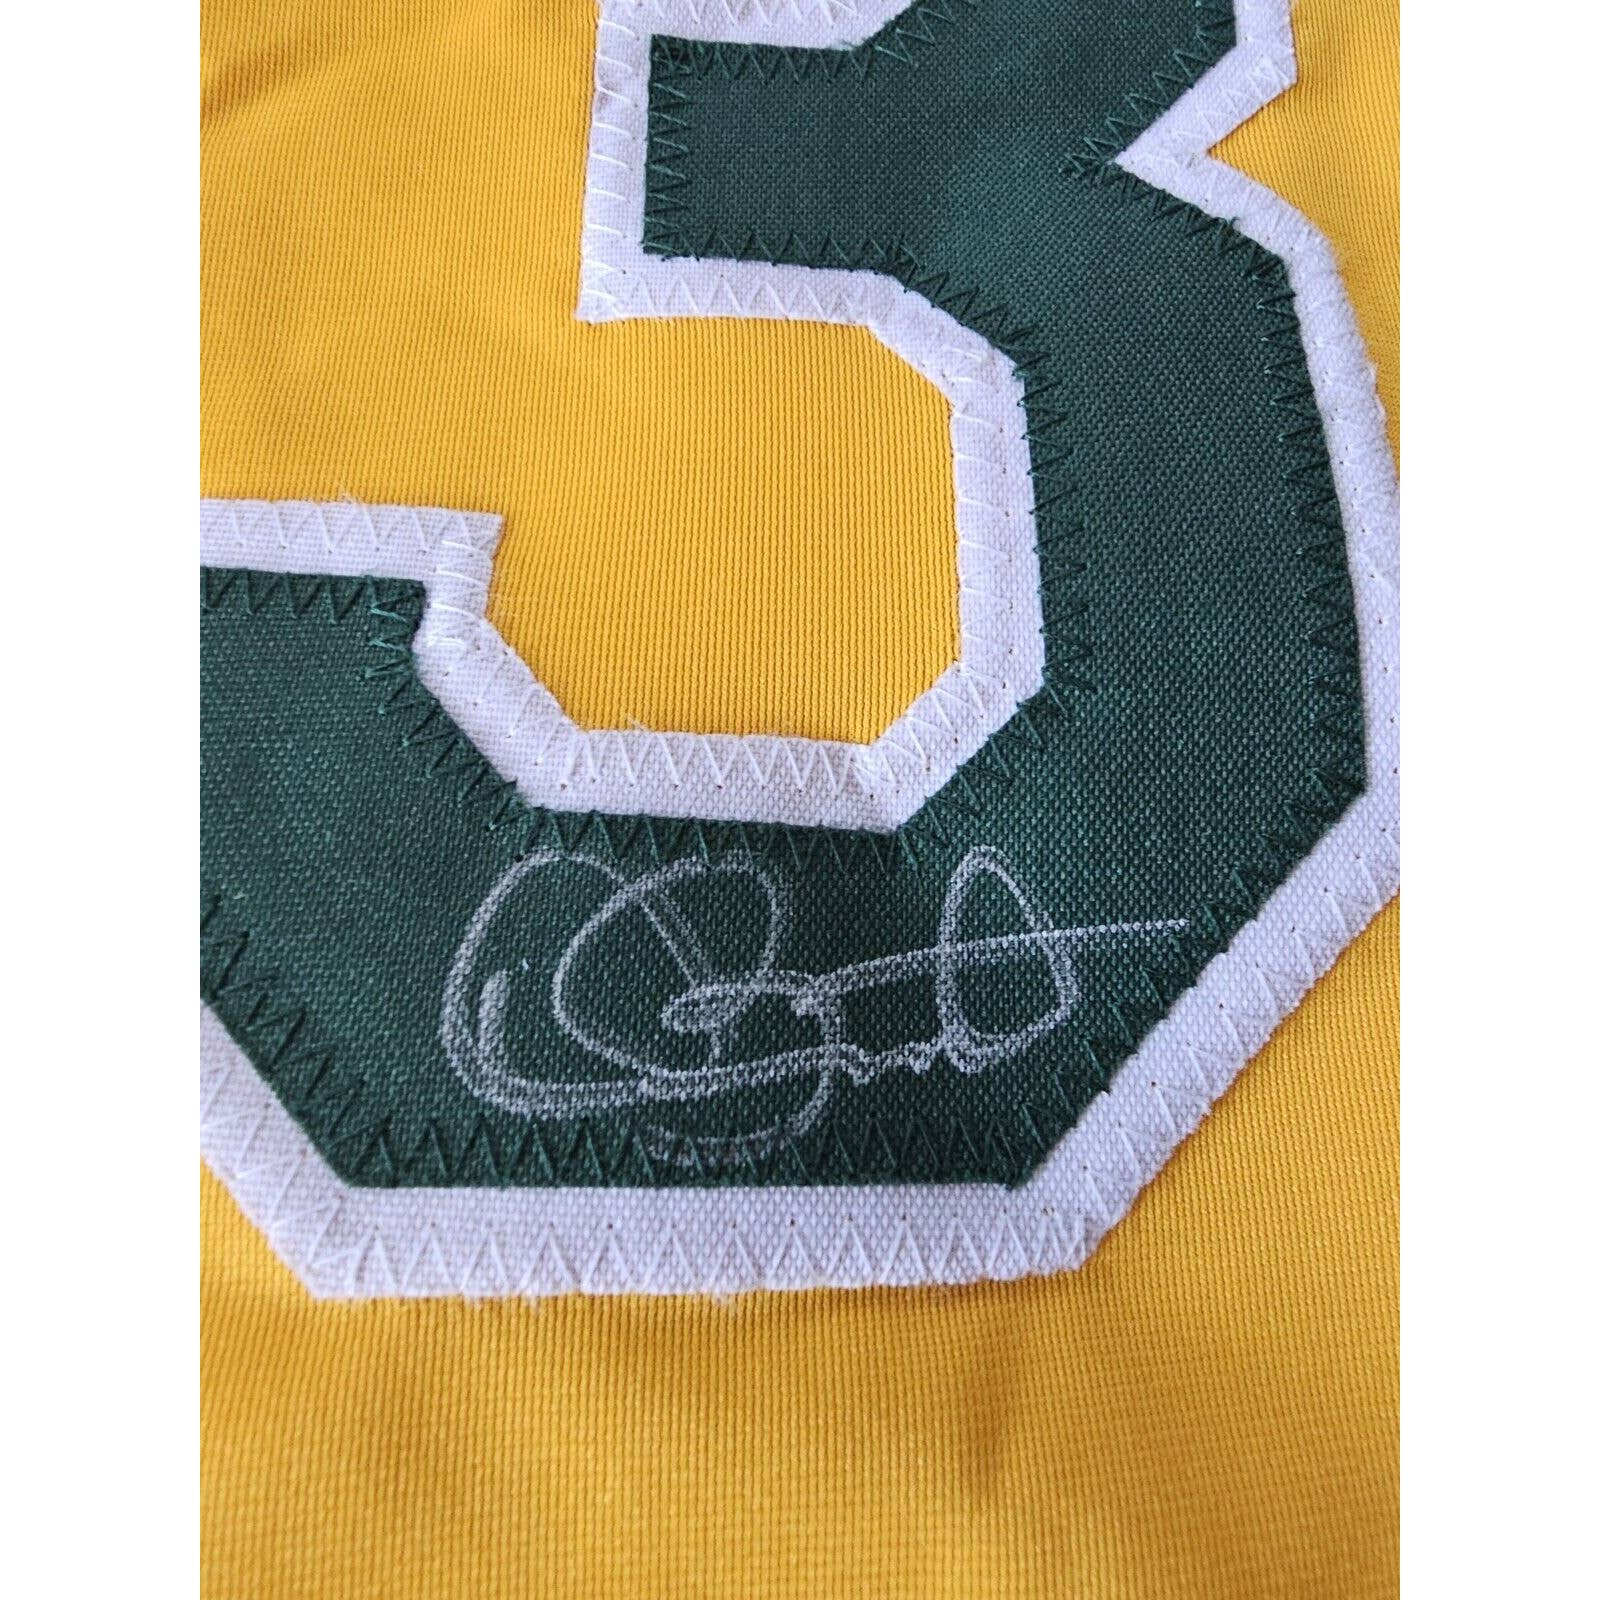 Dave Stewart Autographed/Signed Jersey Beckett COA Oakland A's Athletics - TreasuresEvolved